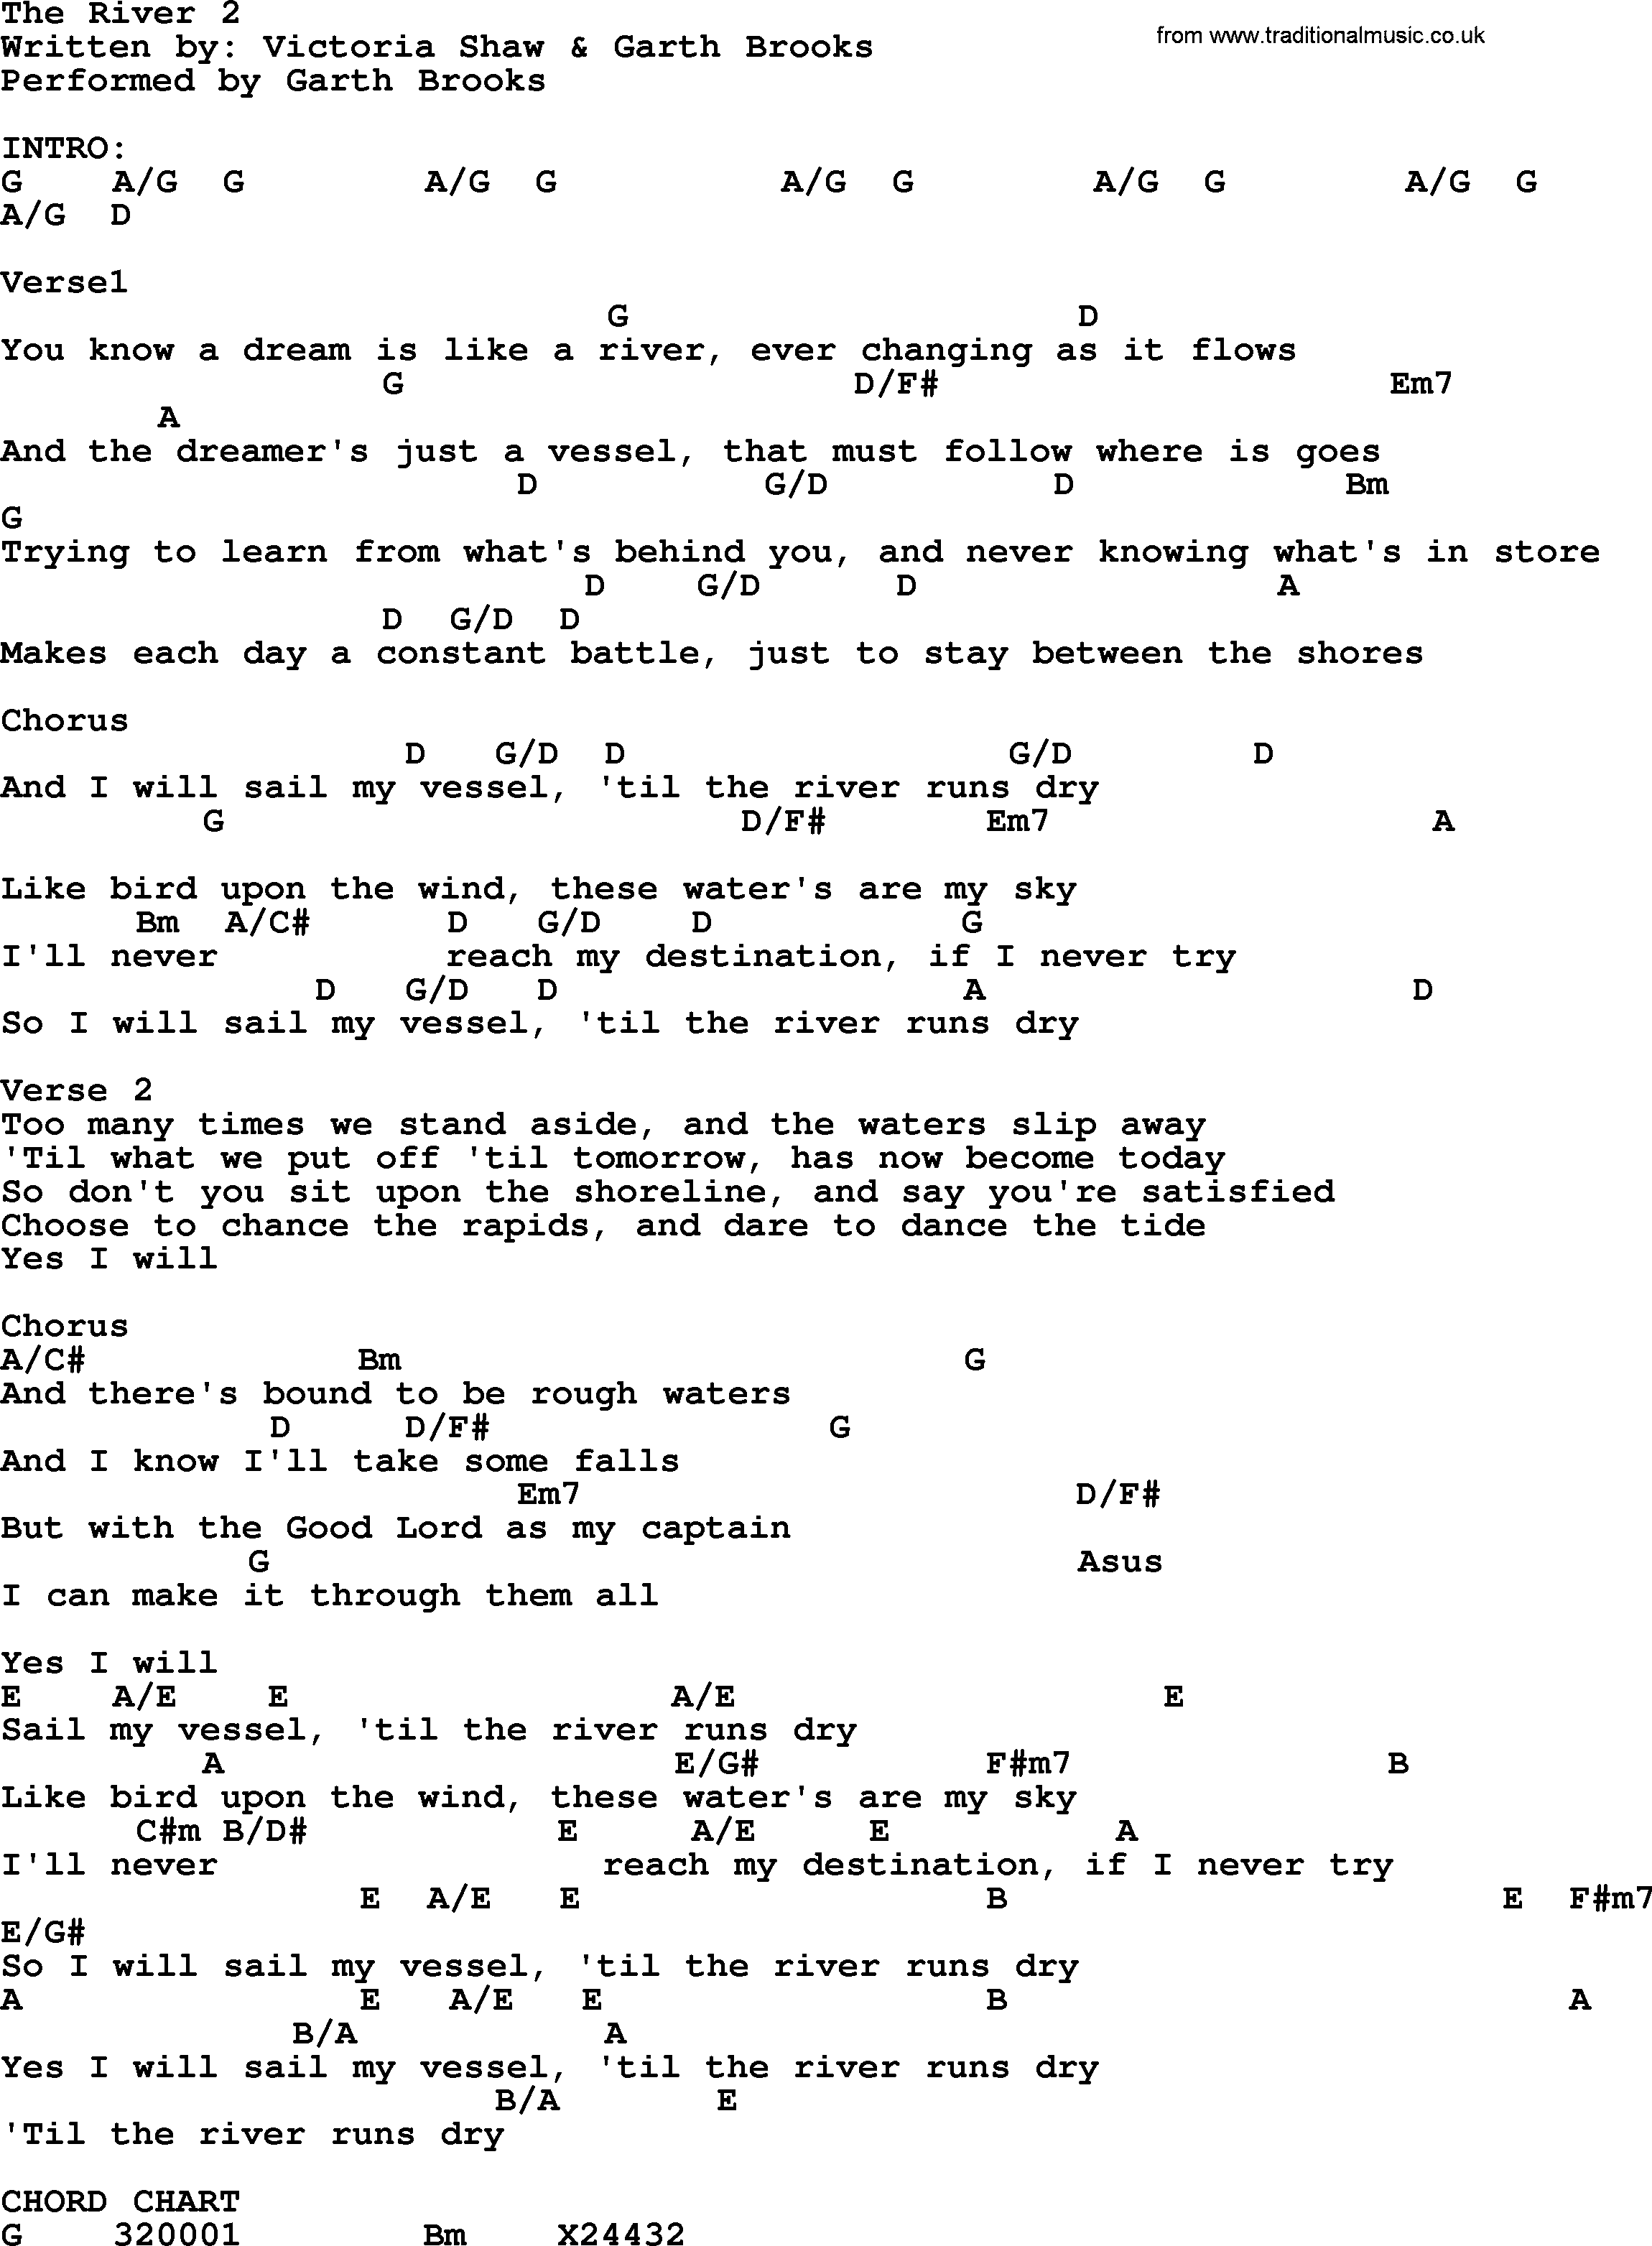 Garth Brooks song: The River 2, lyrics and chords